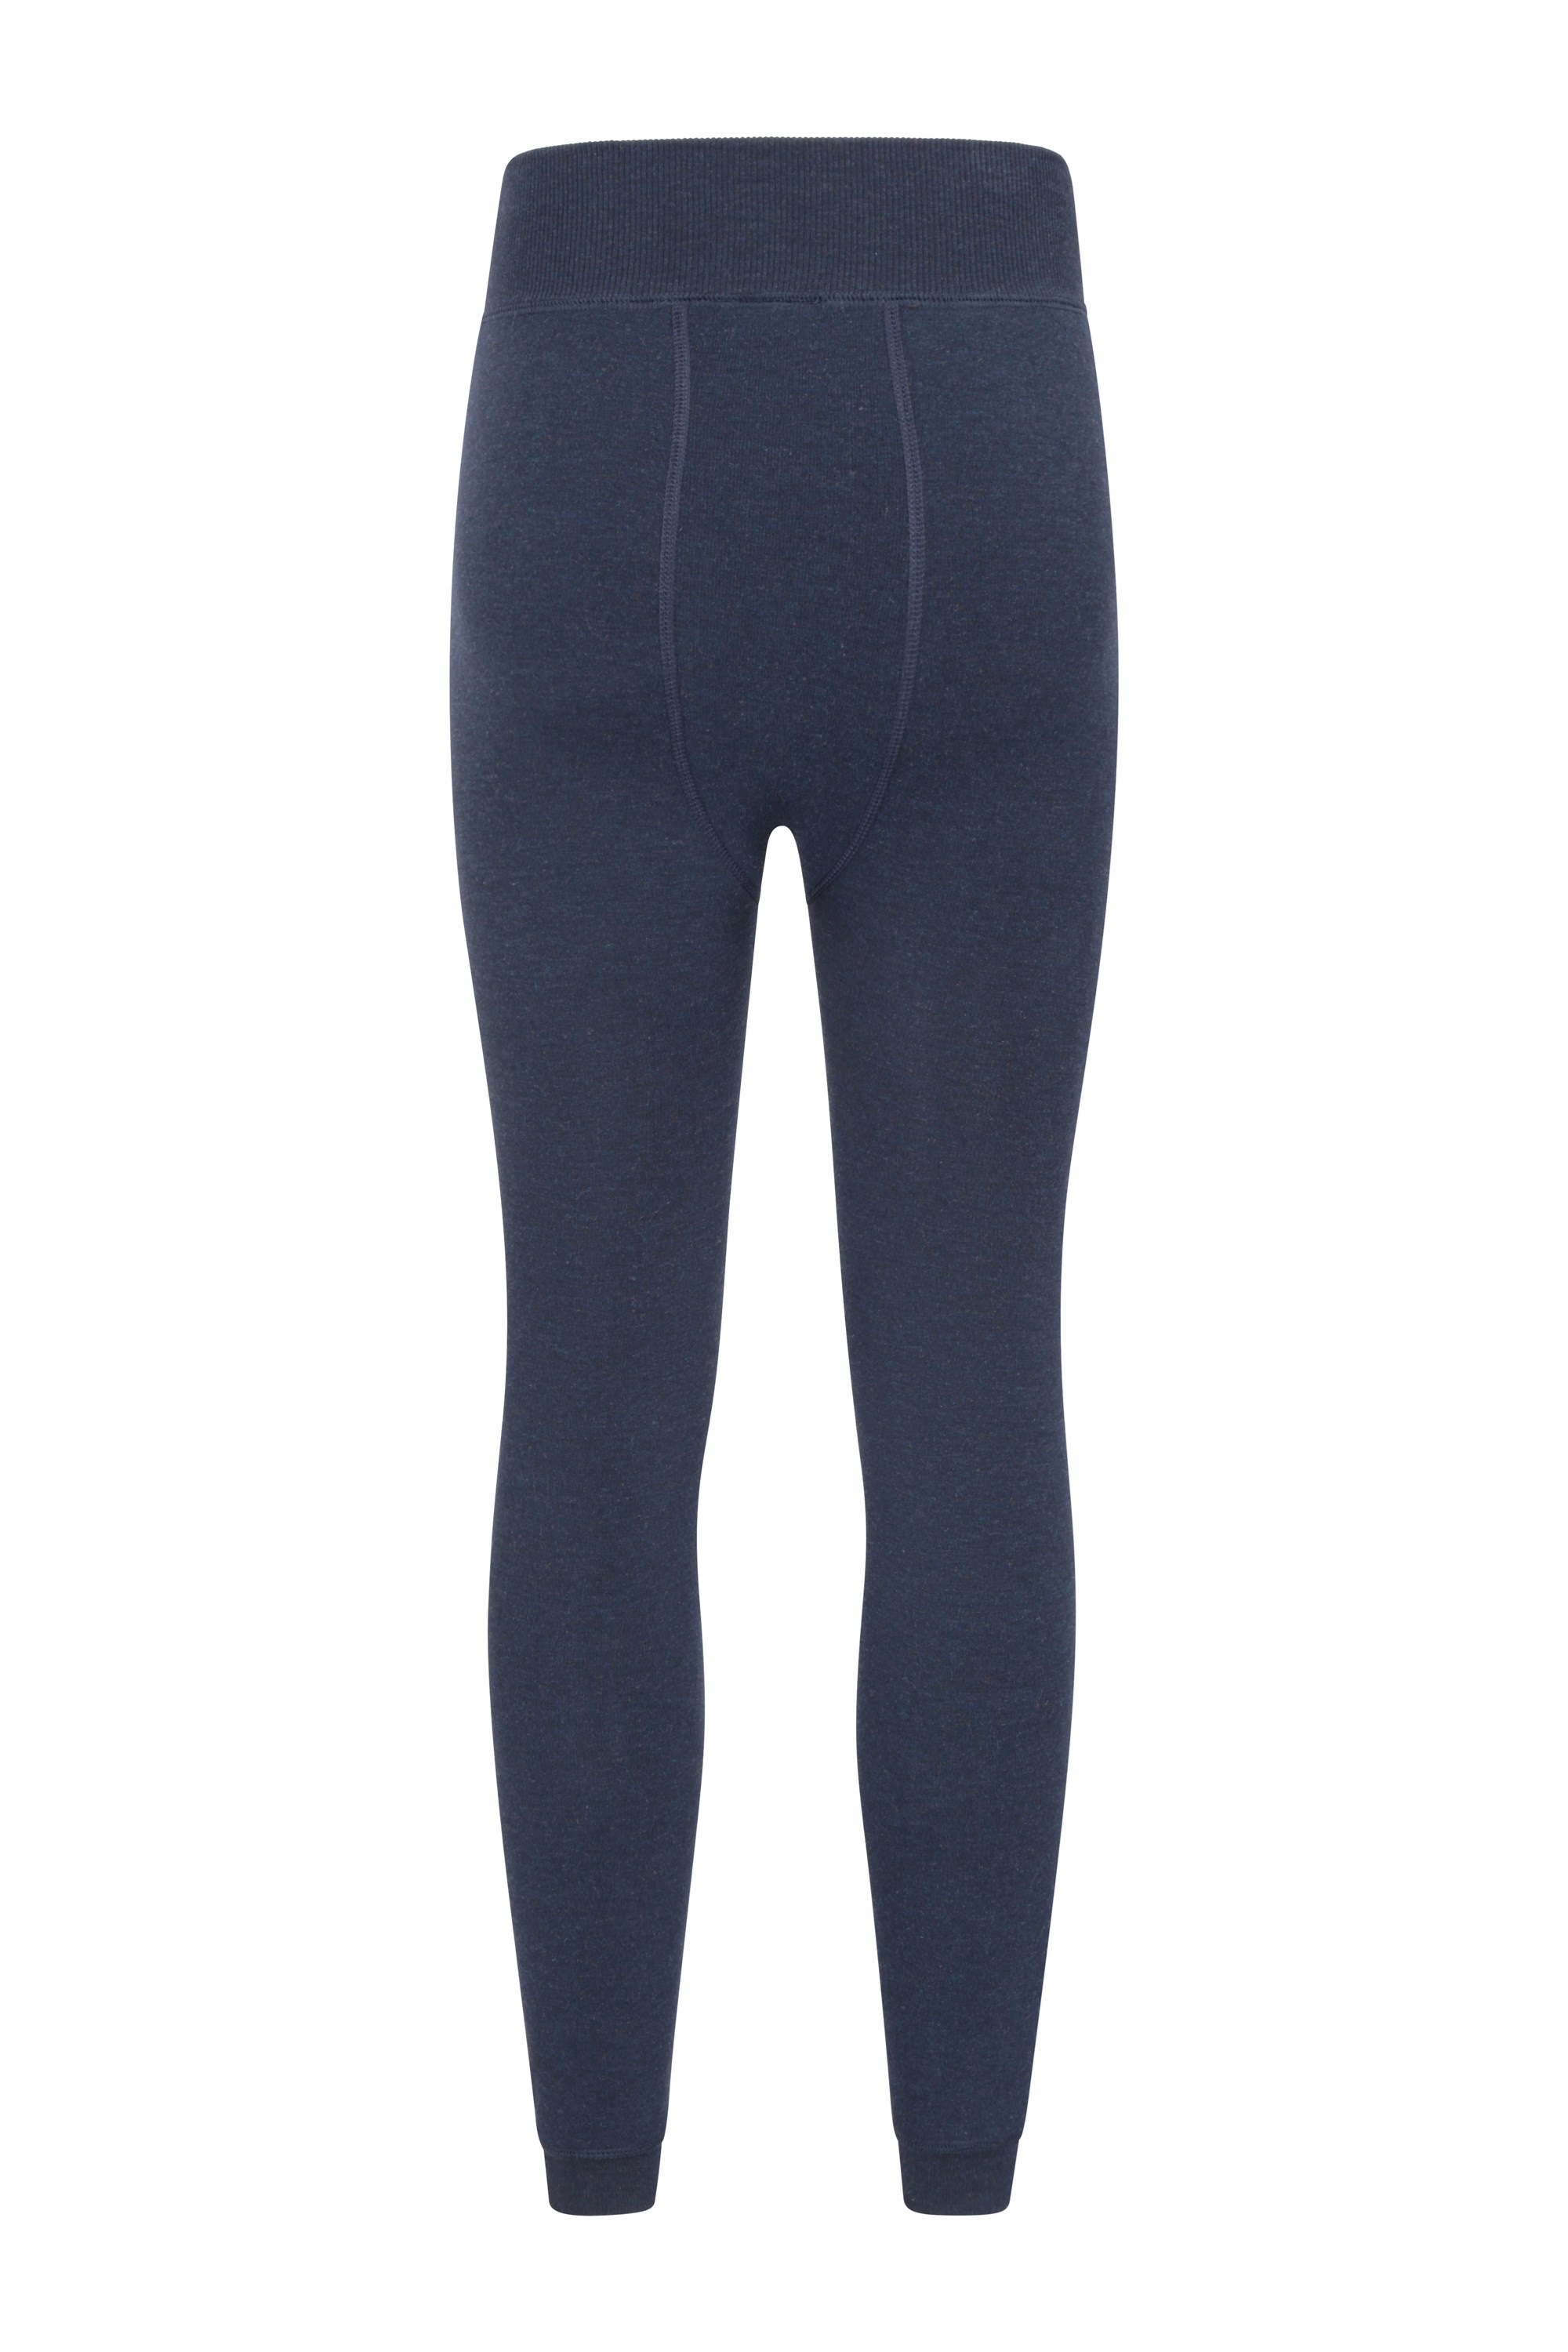 Charcoal Fleece Lined Legging – Gondwana & Divine Clothing Co.